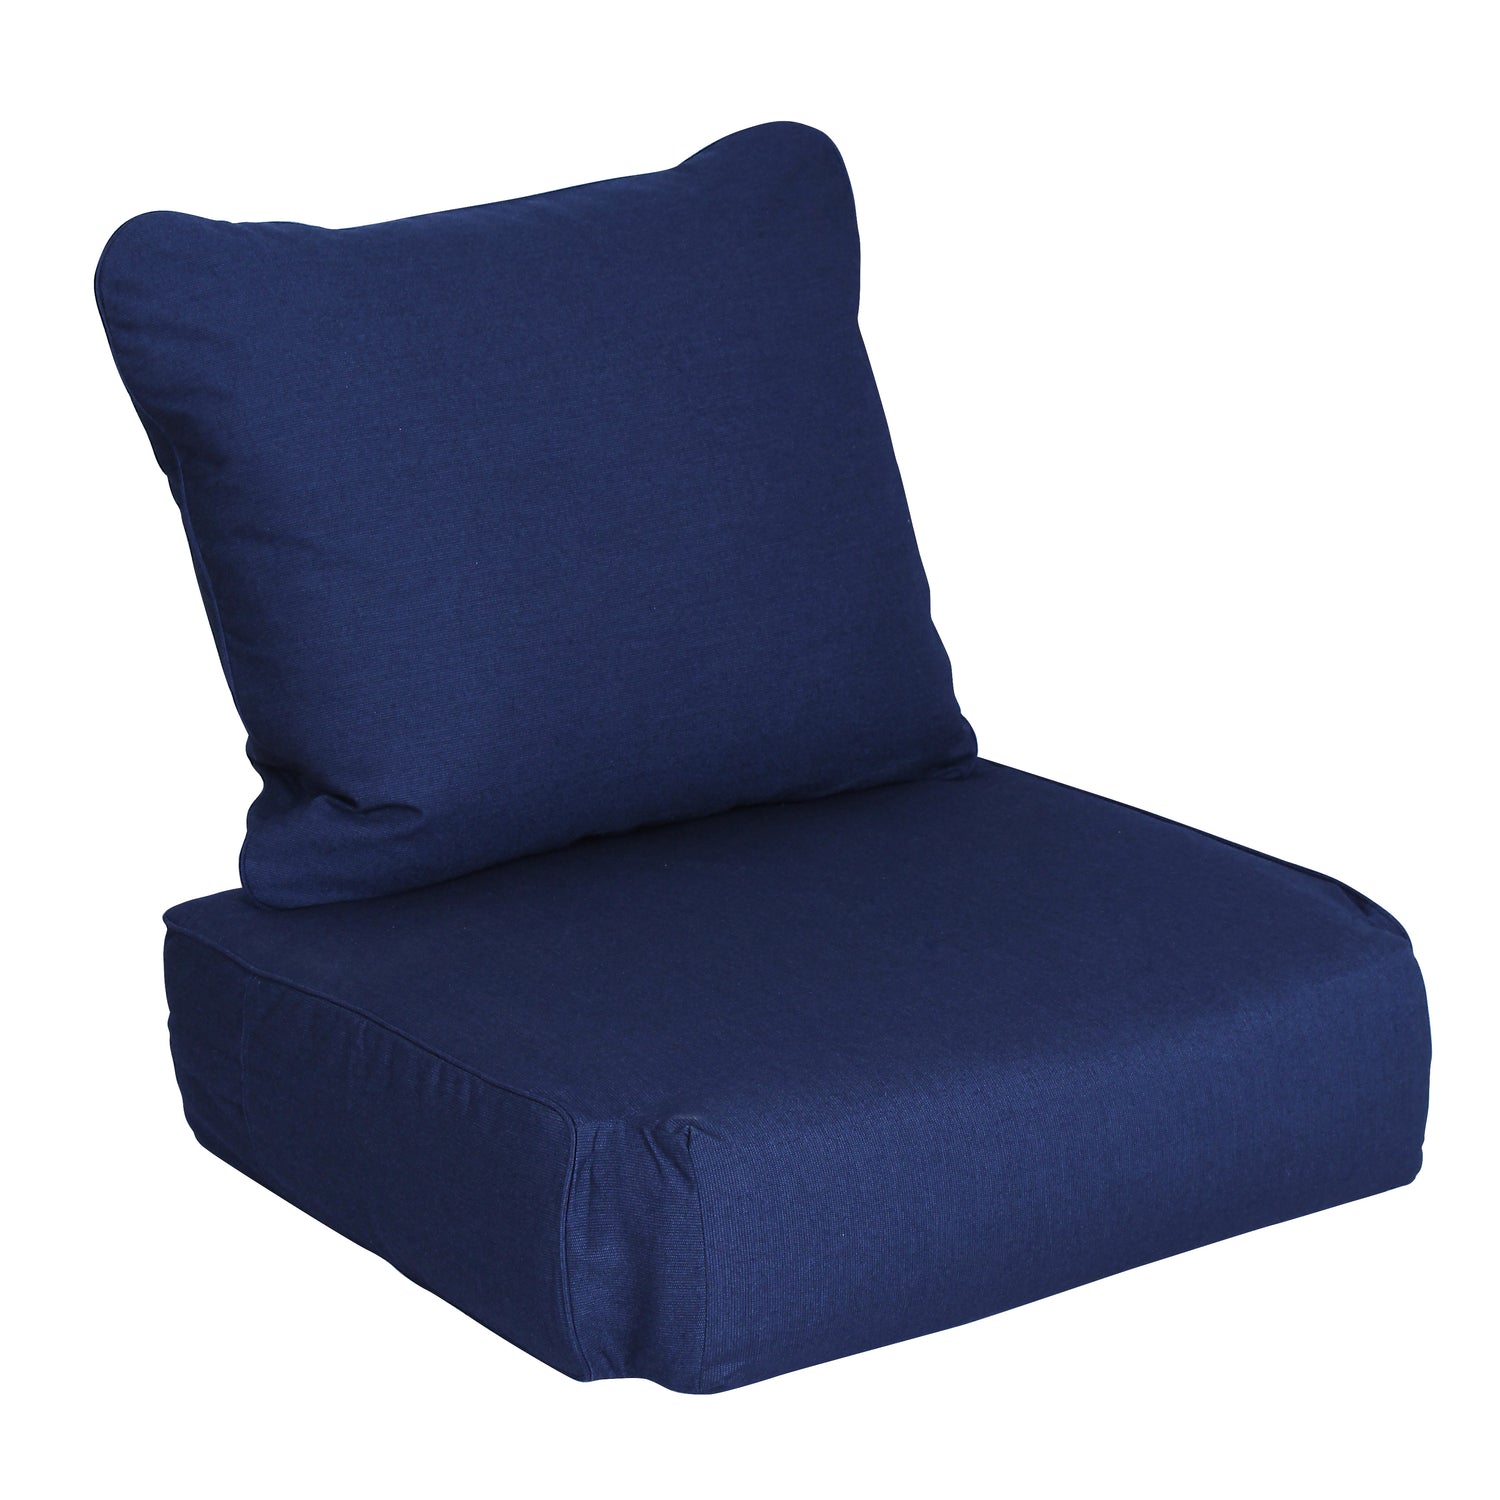 Sunbrella Indigo Outdoor Cushion Slipcover Replacement for Seating of Caterina 7 Piece Patio Conversation Set - Cambridge Casual [DETAILS]